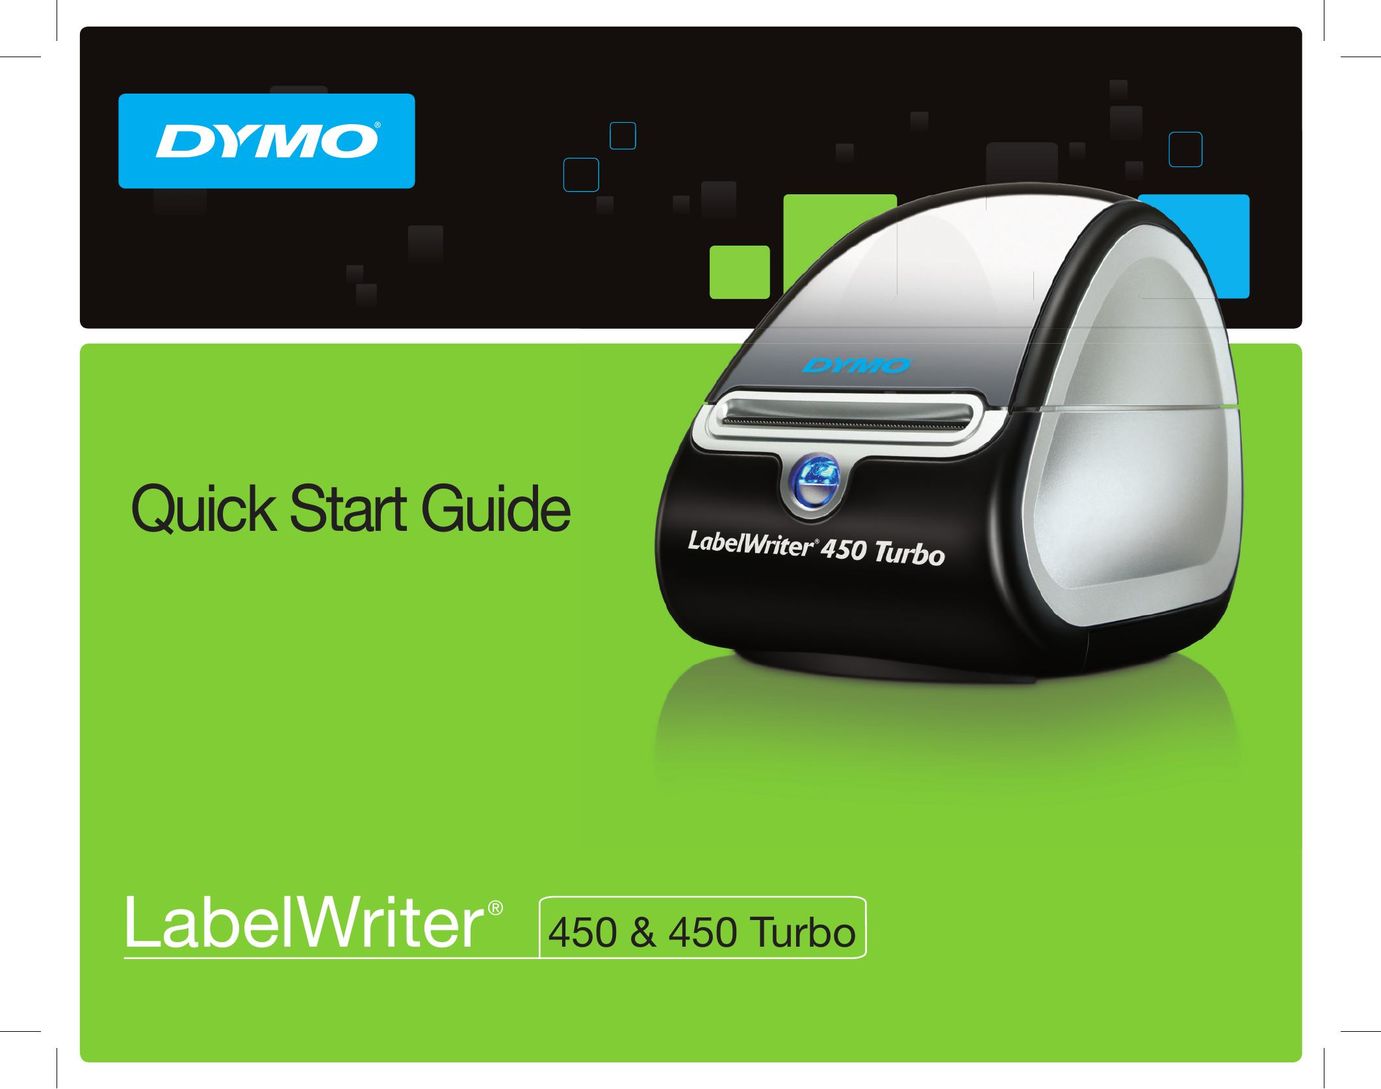 Dymo 450&450 turbo Label Maker User Manual